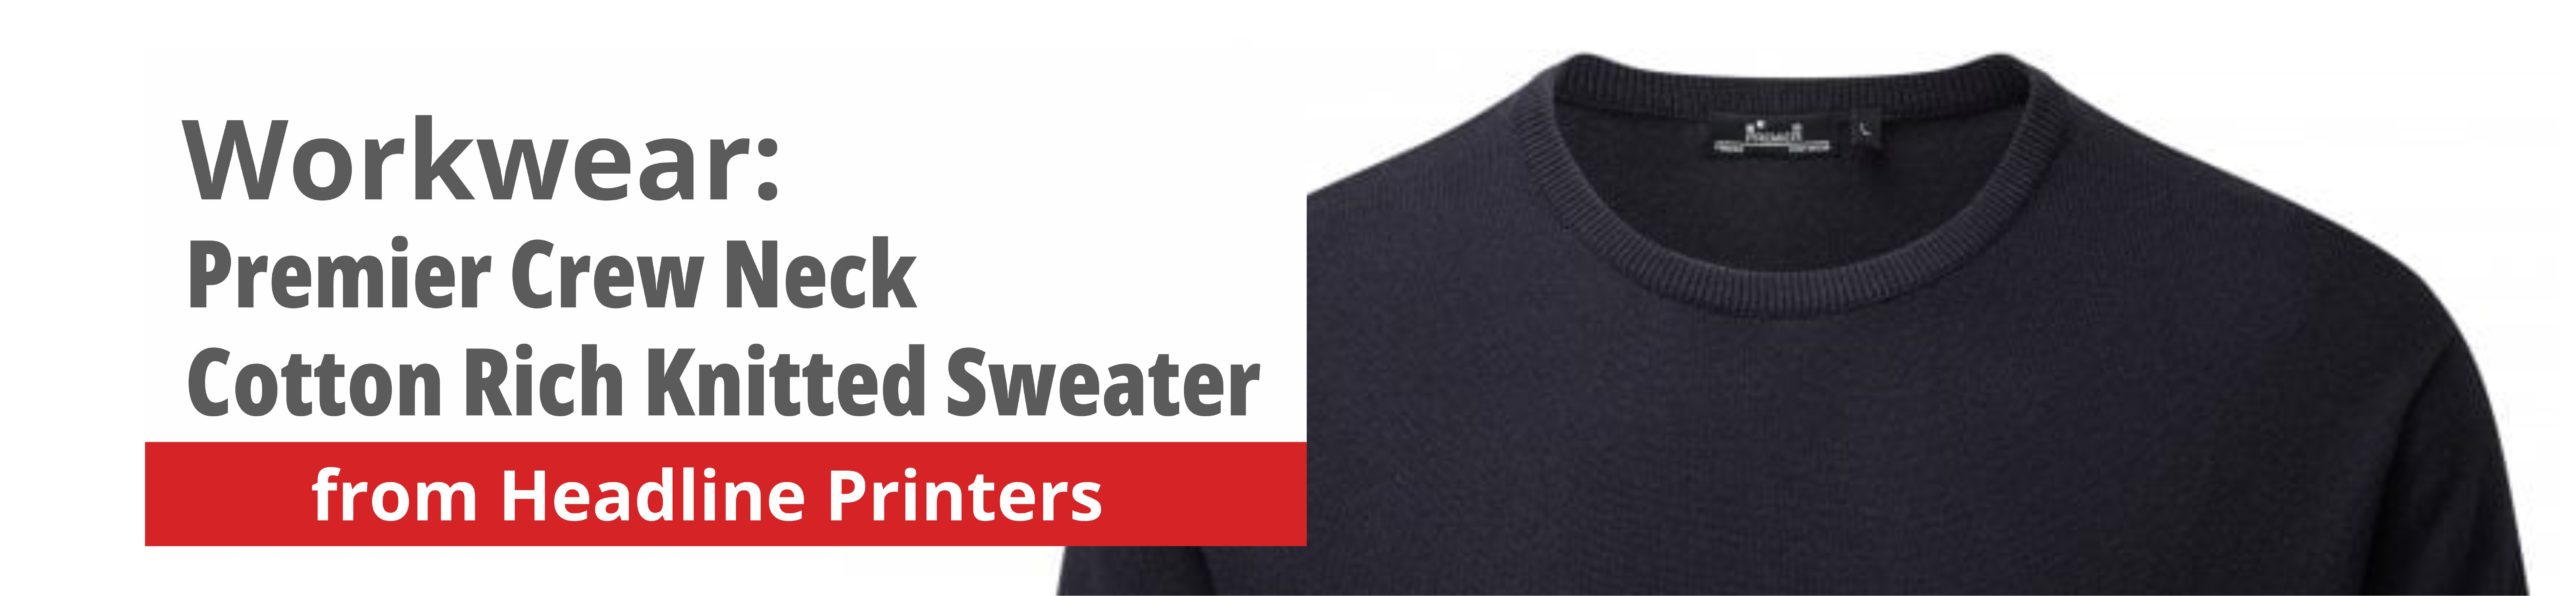 Premier Crew Neck Cotton Rich Knitted Sweater